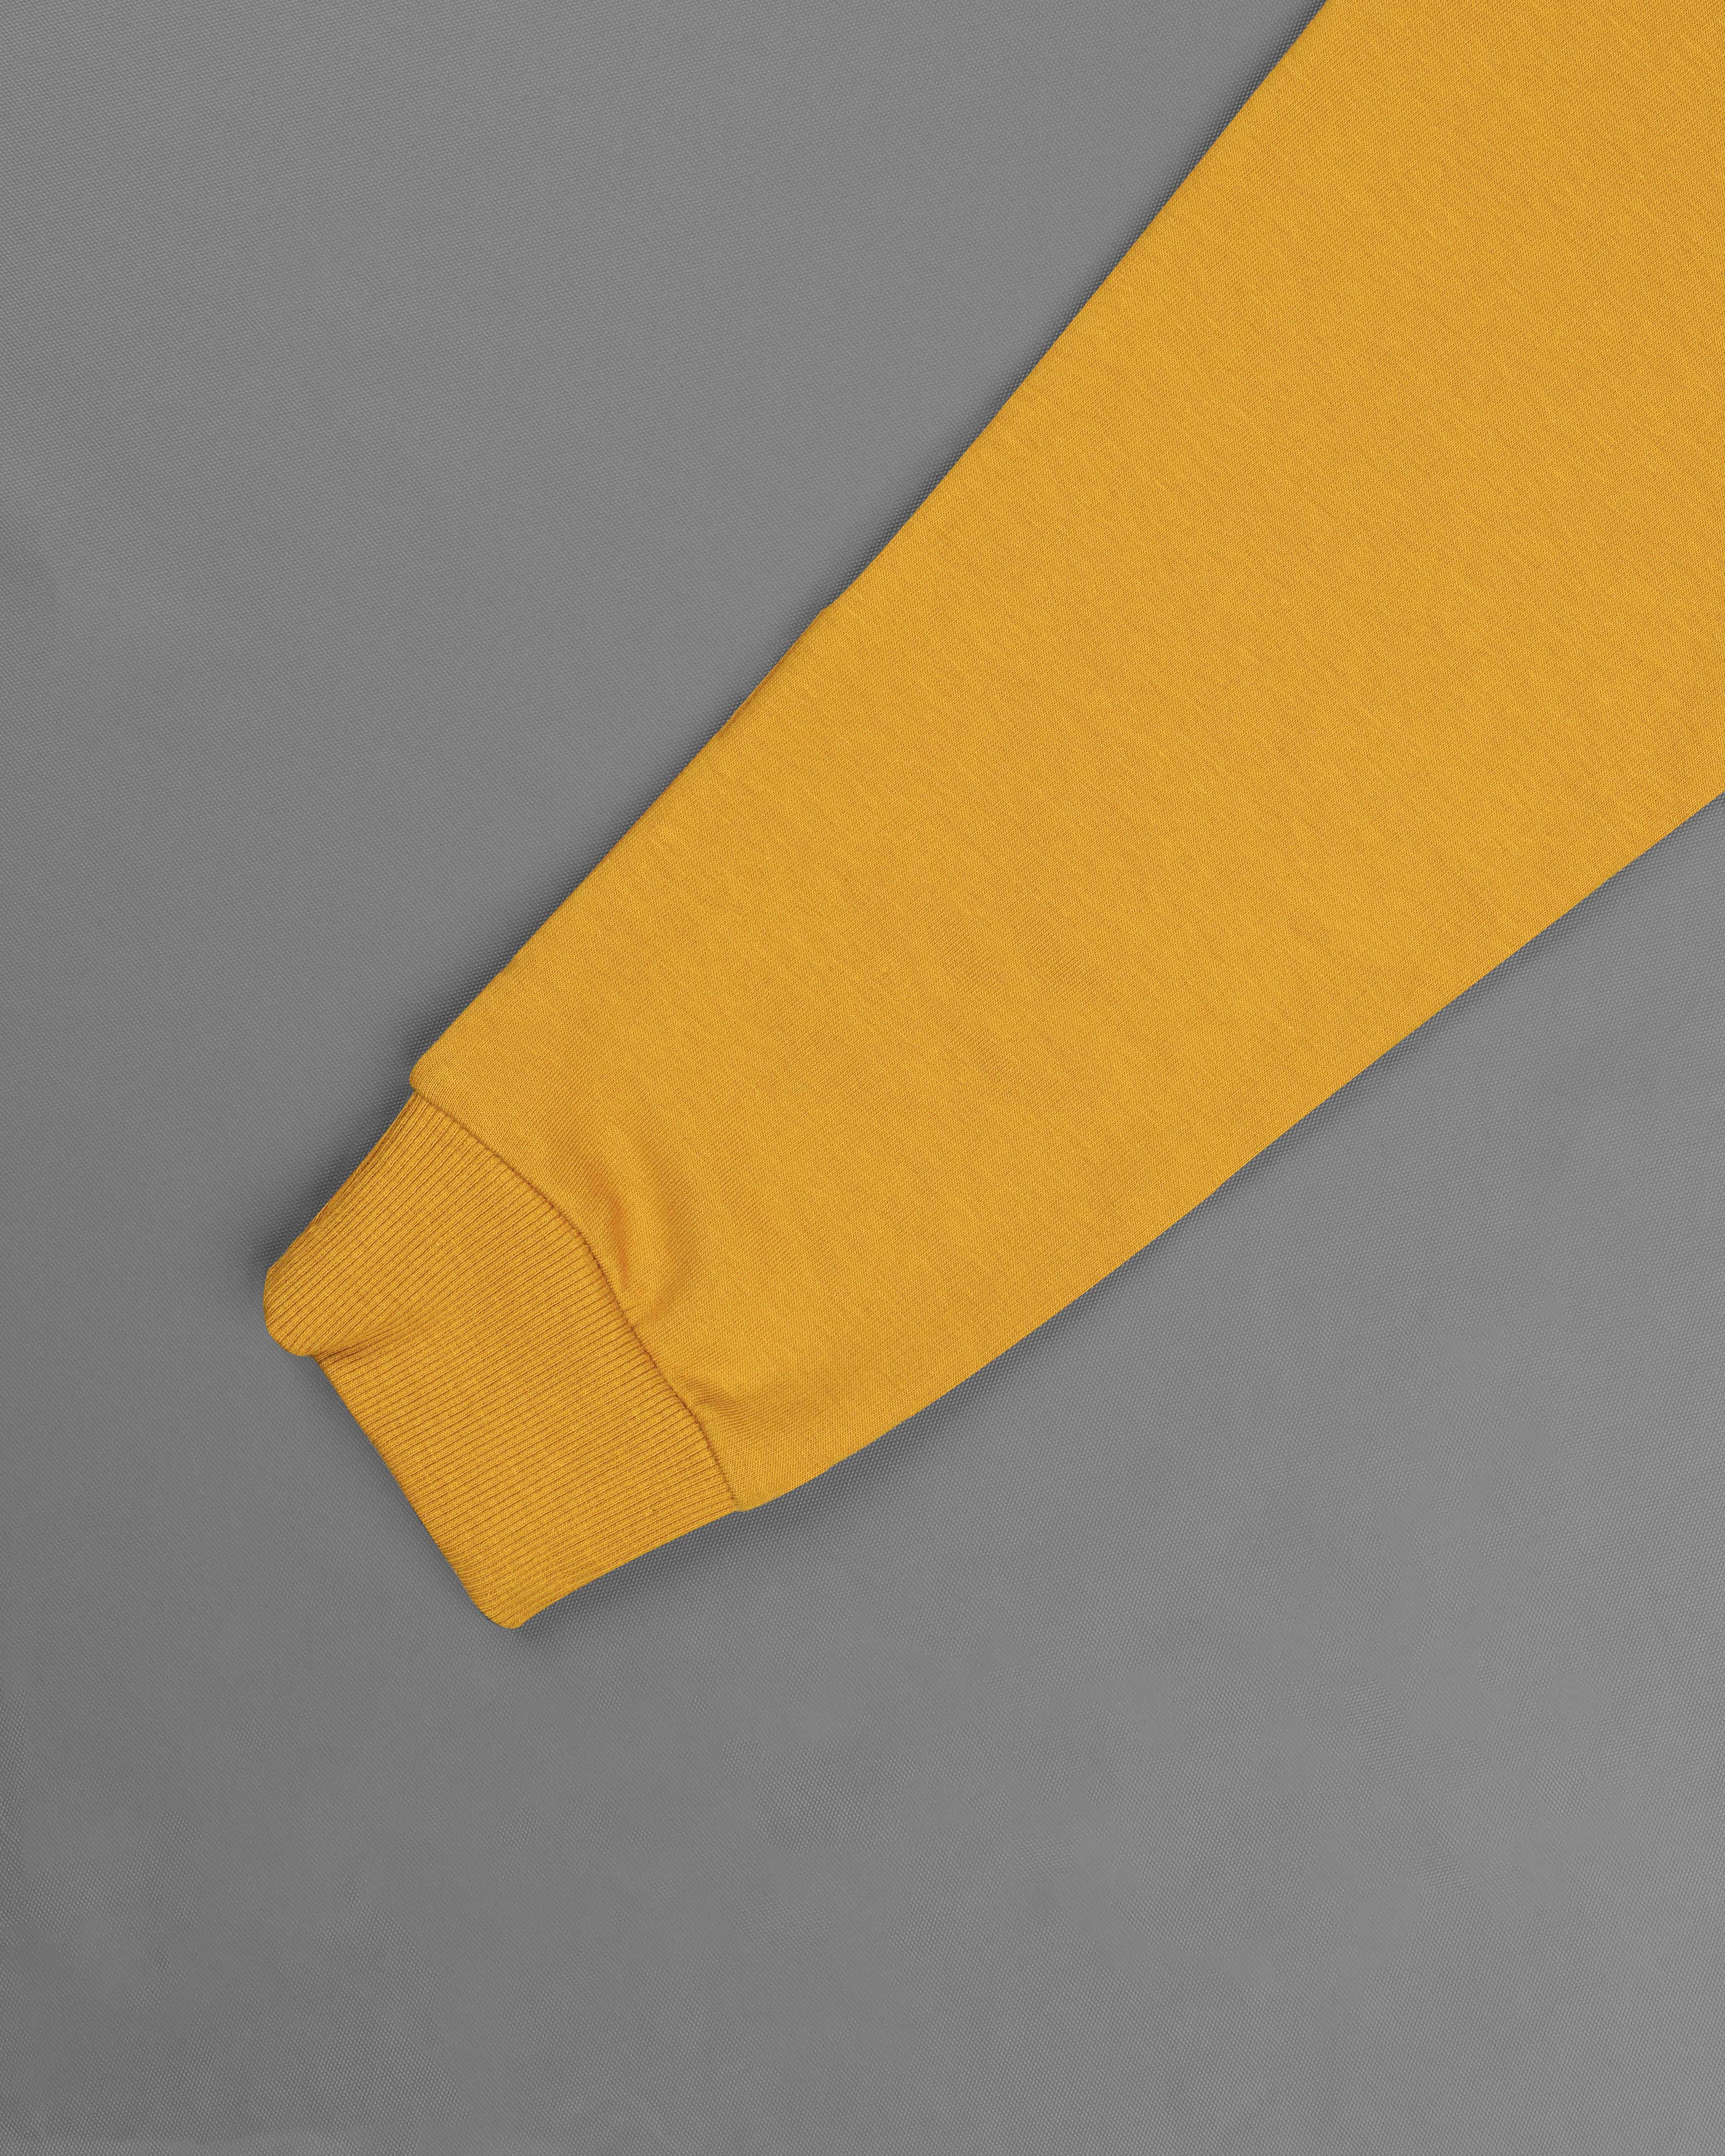 Tangaroa Blue, Yellow and White Block Pattern Super Soft Premium Cotton Hoodie Sweatshirt TS608-S, TS608-M, TS608-L, TS608-XL, TS608-XXL, TS608-3XL, TS608-4XL